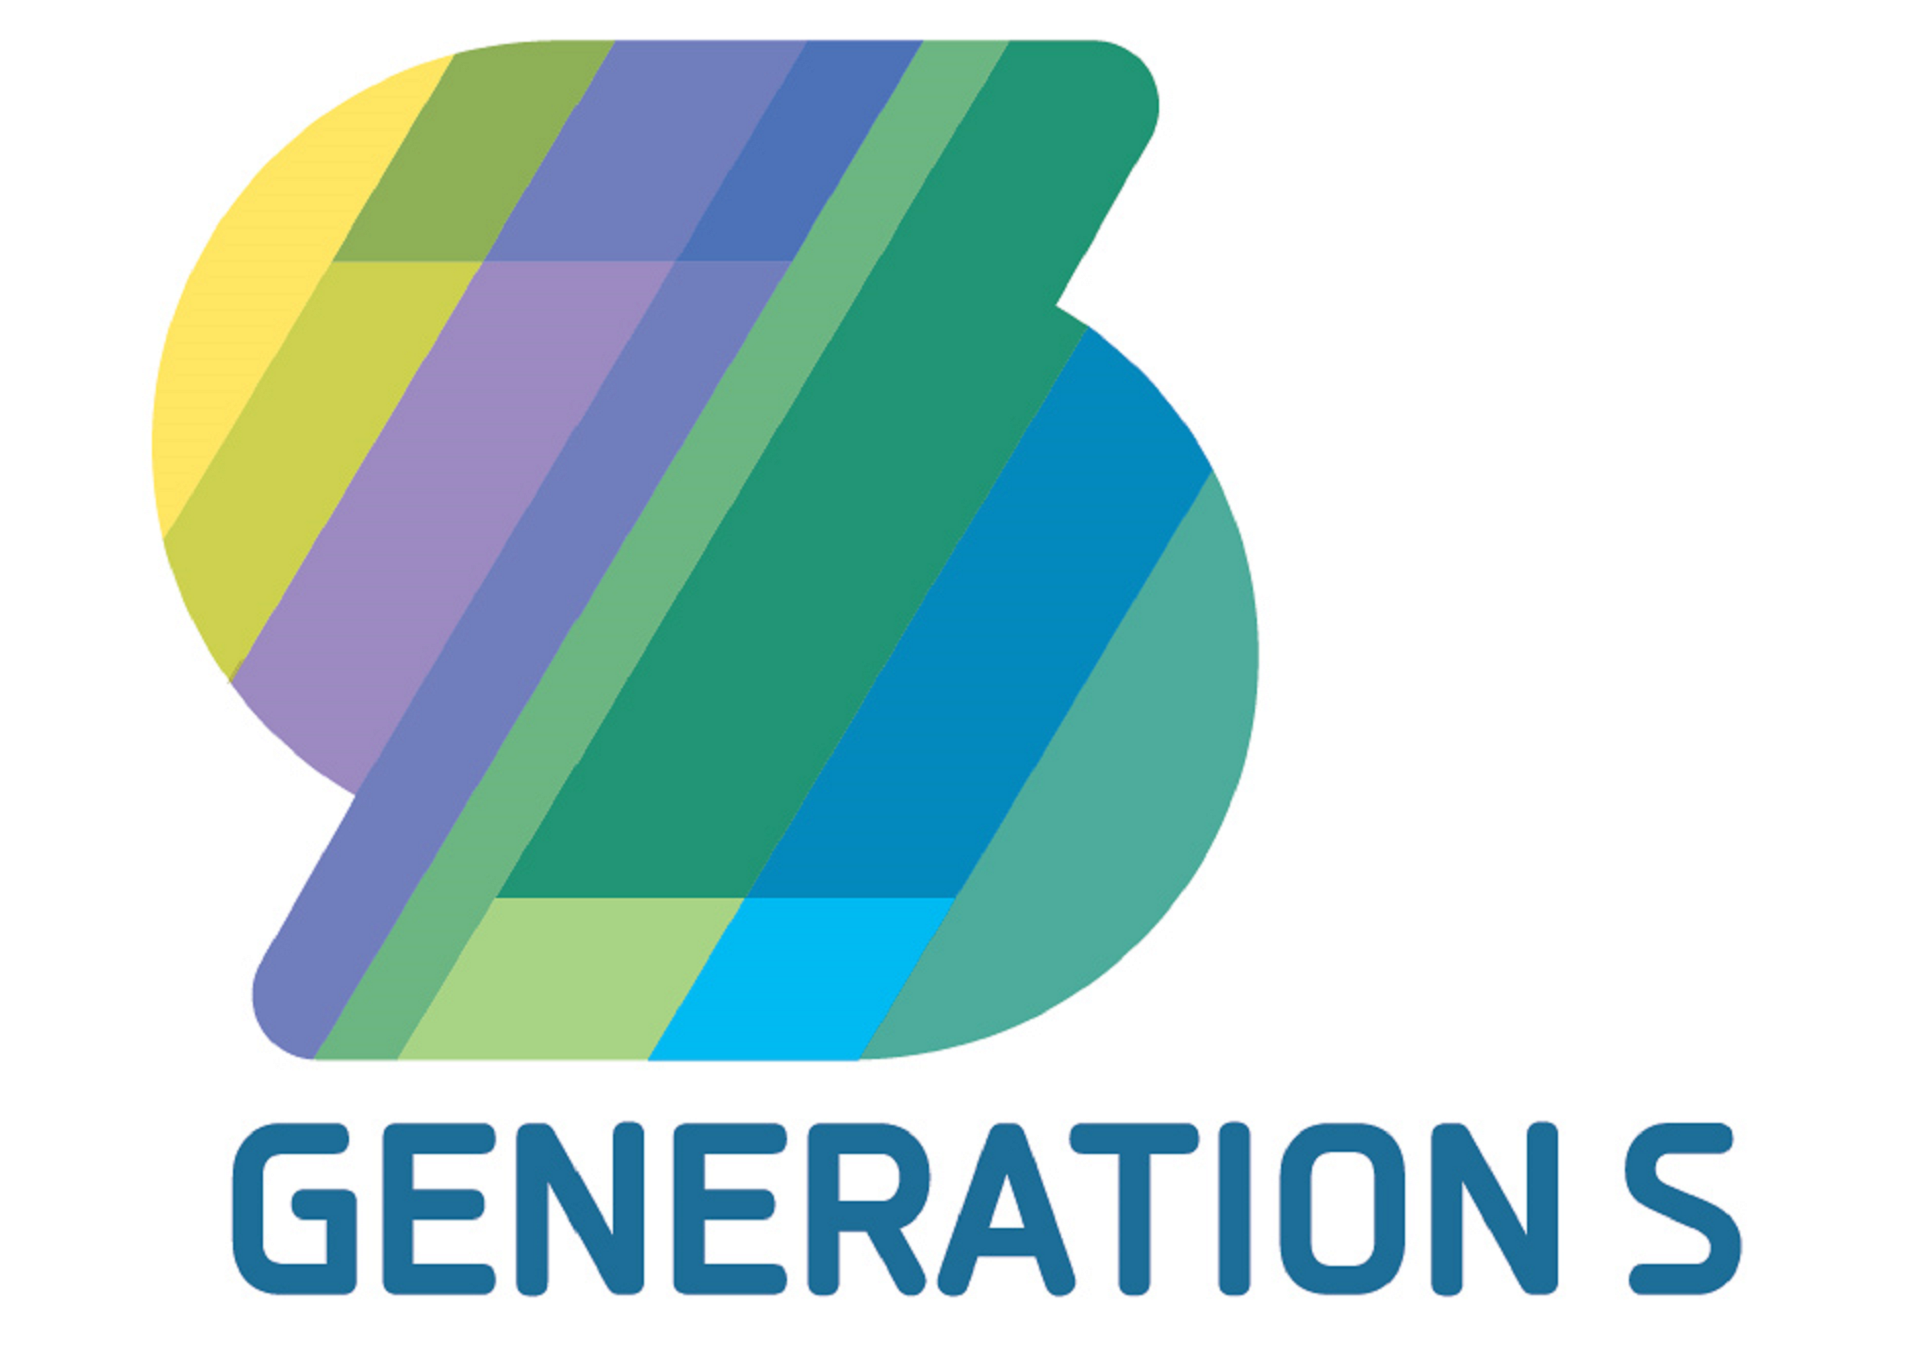 Generation means. Generations логотип. Generations акселератор. Generation акселератор логотип. Акселерационная программа Generations.